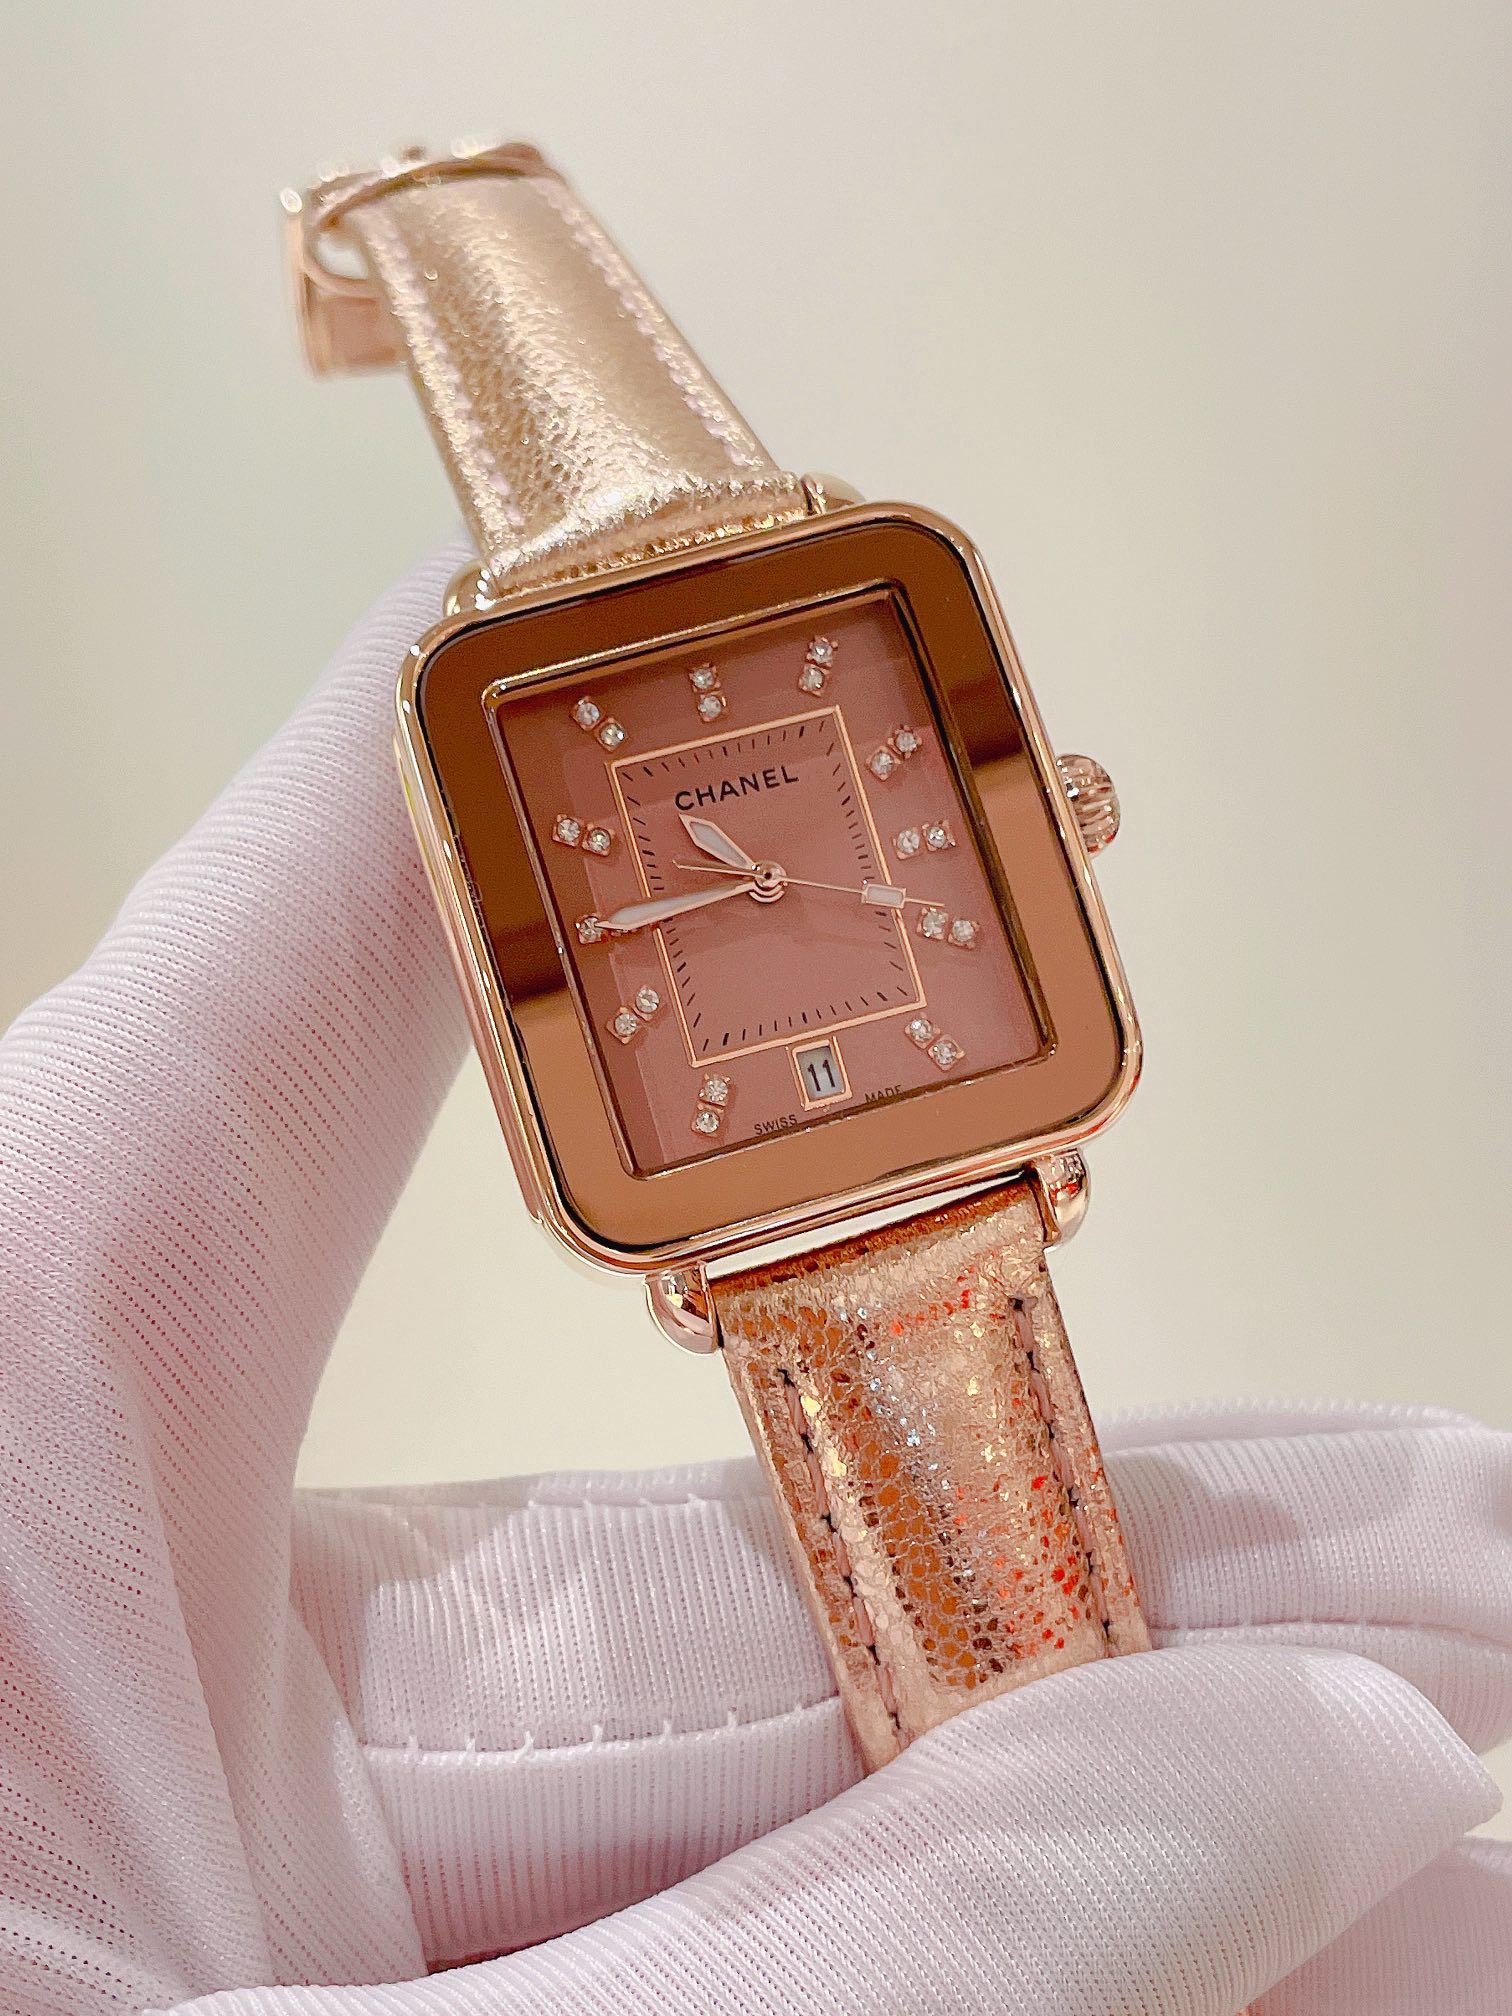 CHANEL Watch Modern Classic Fashion Design Leather Watchband